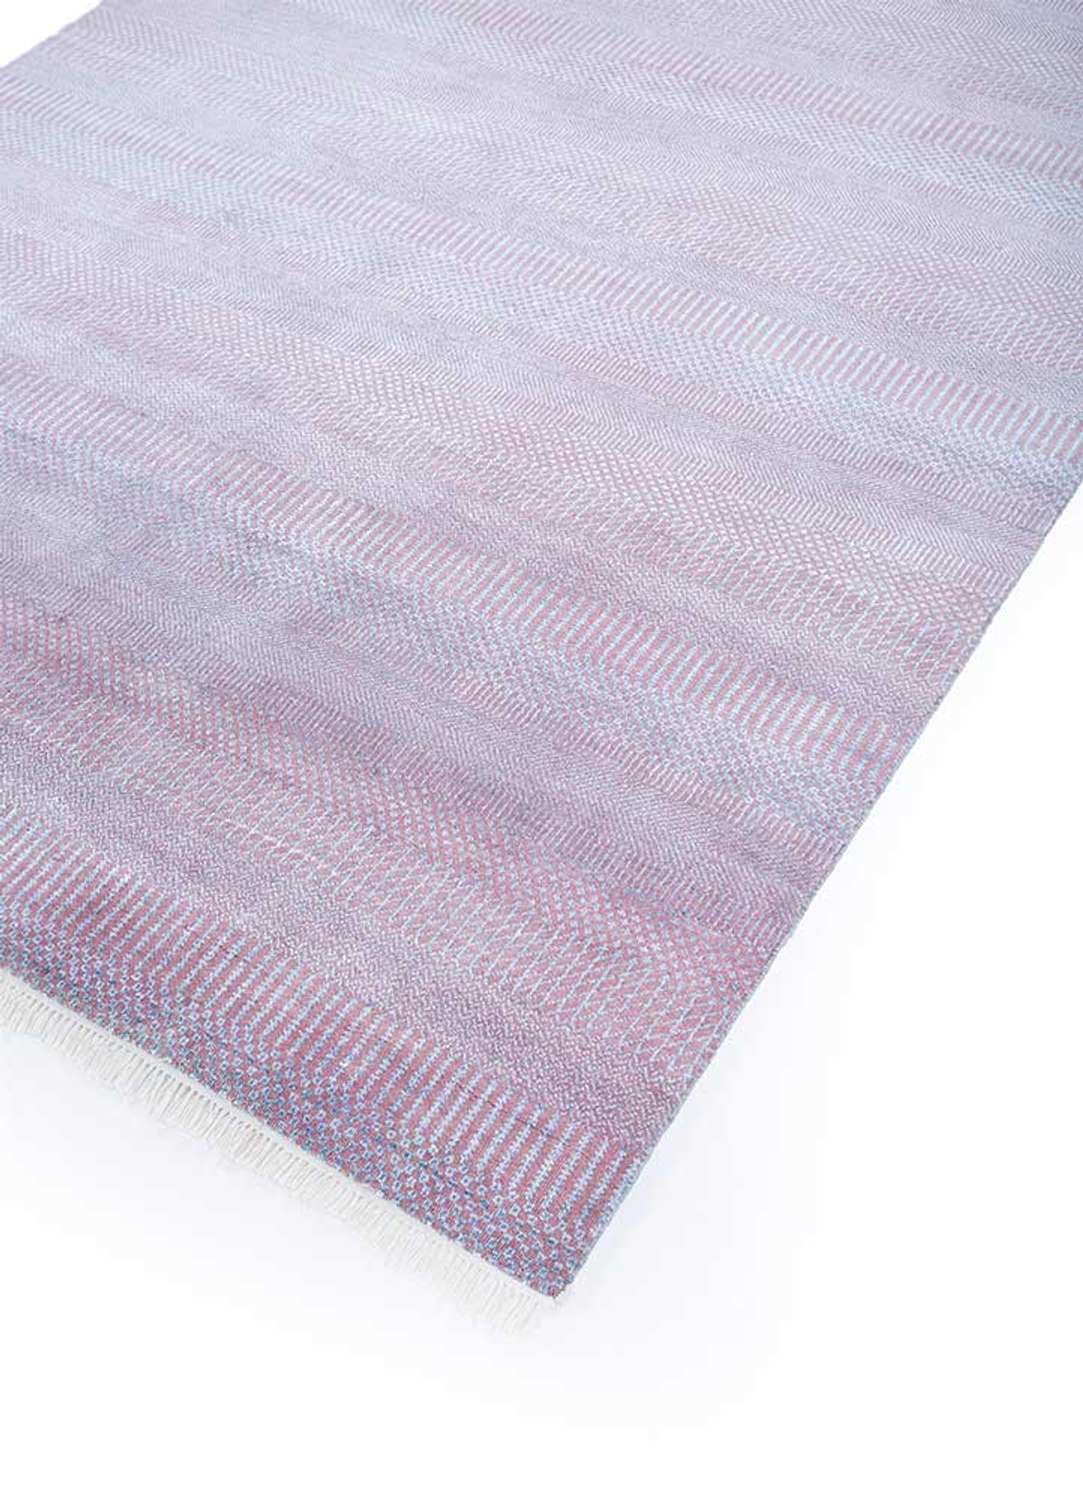 Wool Rug - Jakari - rectangle